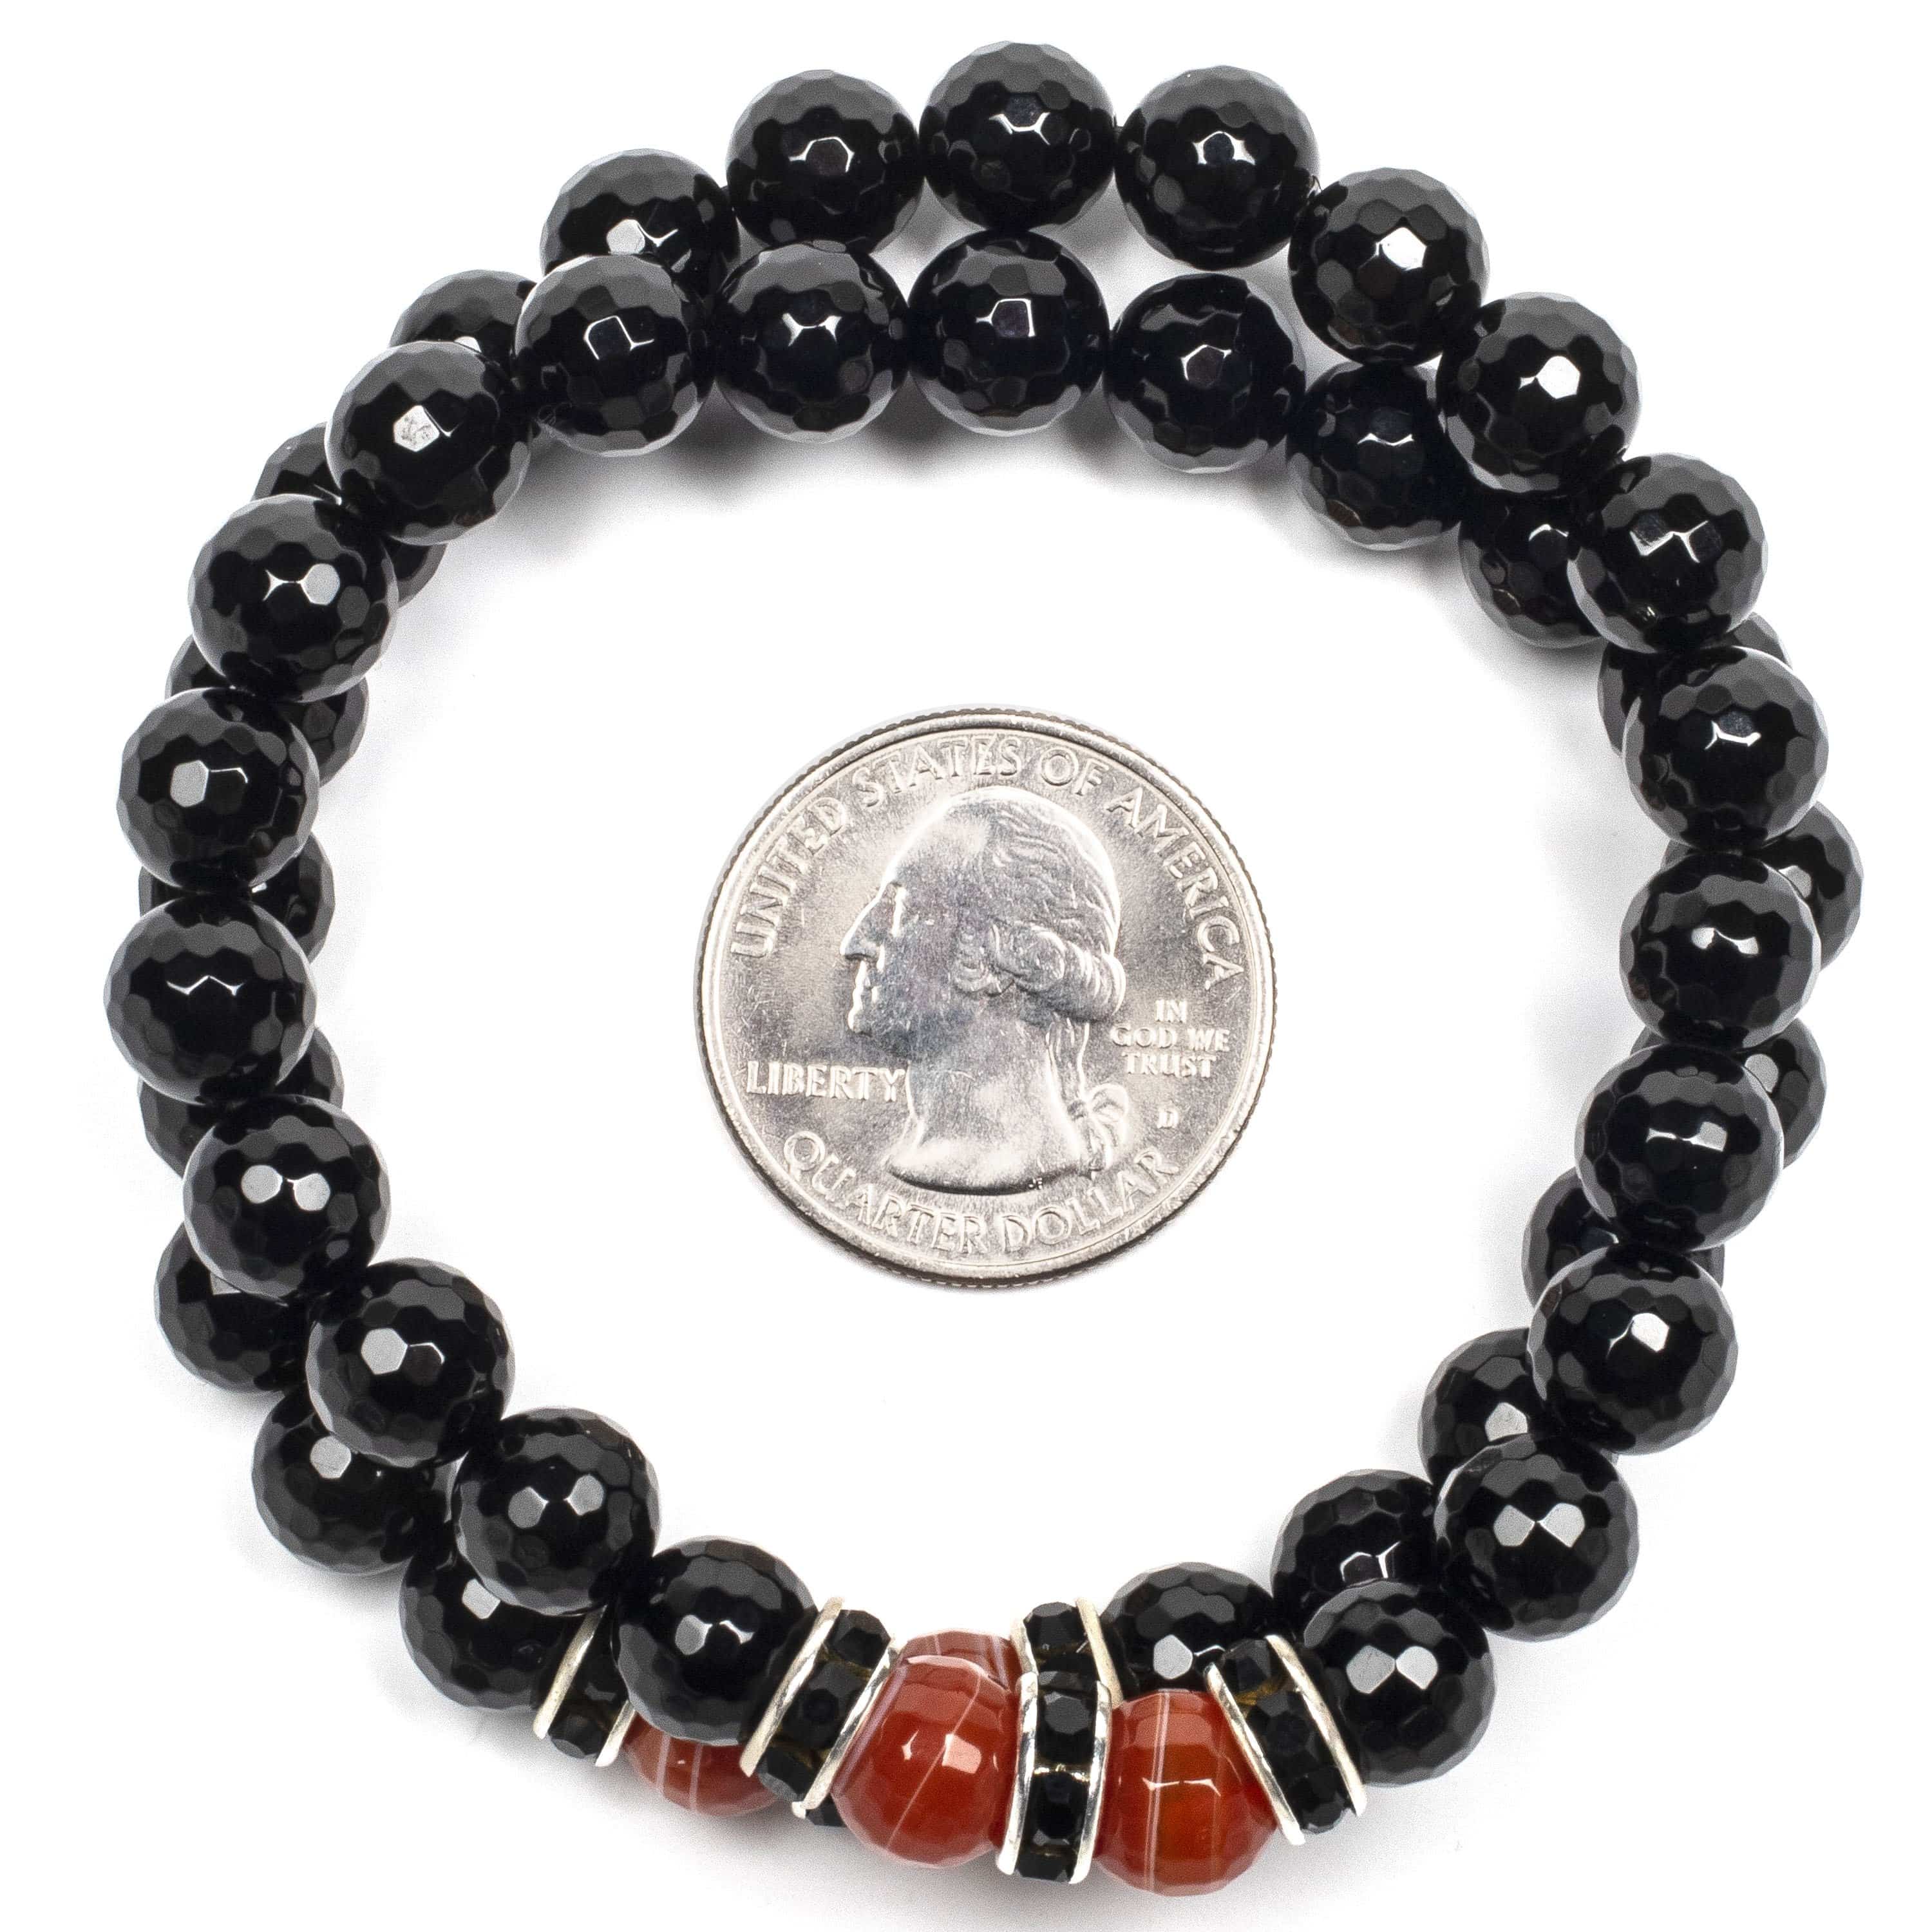 Kalifano Gemstone Bracelets Faceted Black Agate 8mm Beads with Carnelian and Black & Silver Accent Beads Double Wrap Elastic Gemstone Bracelet WHITE-BGI2-007